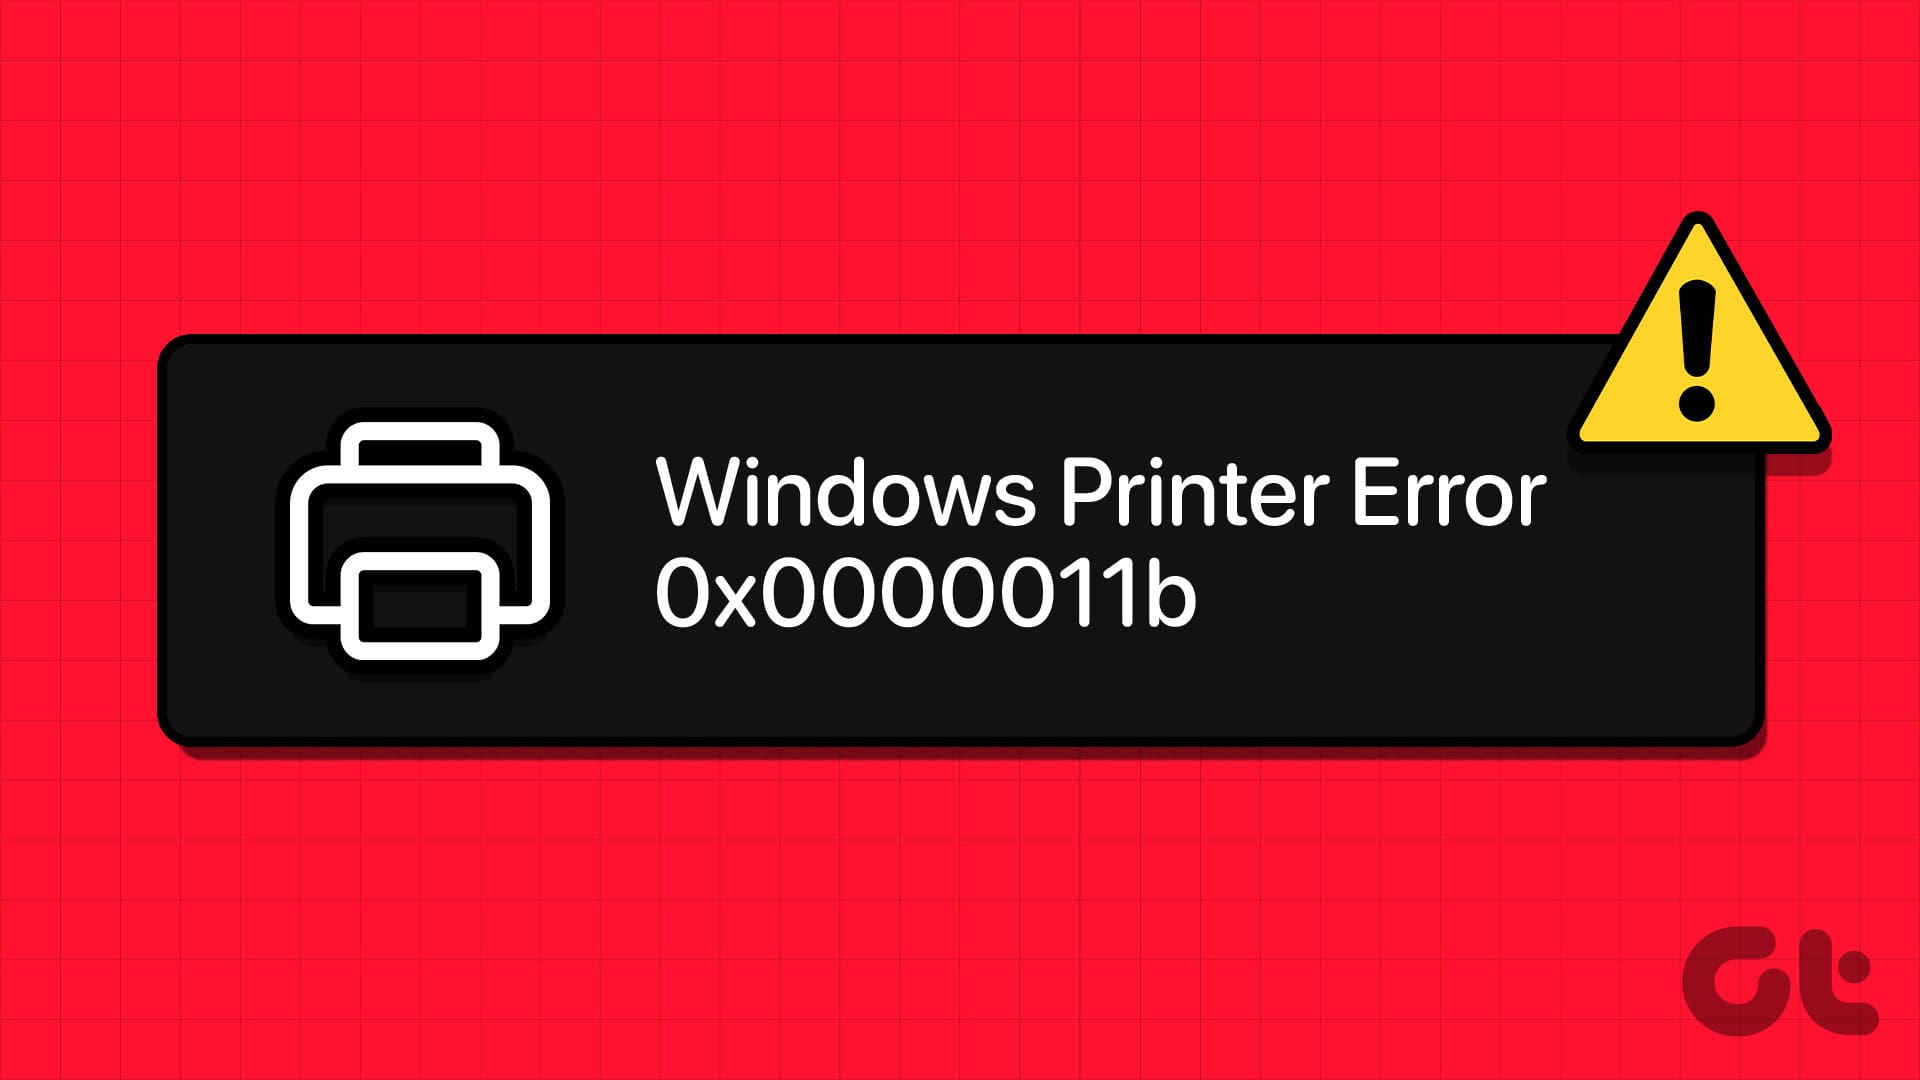 Printer Error 0x0000011b on Windows